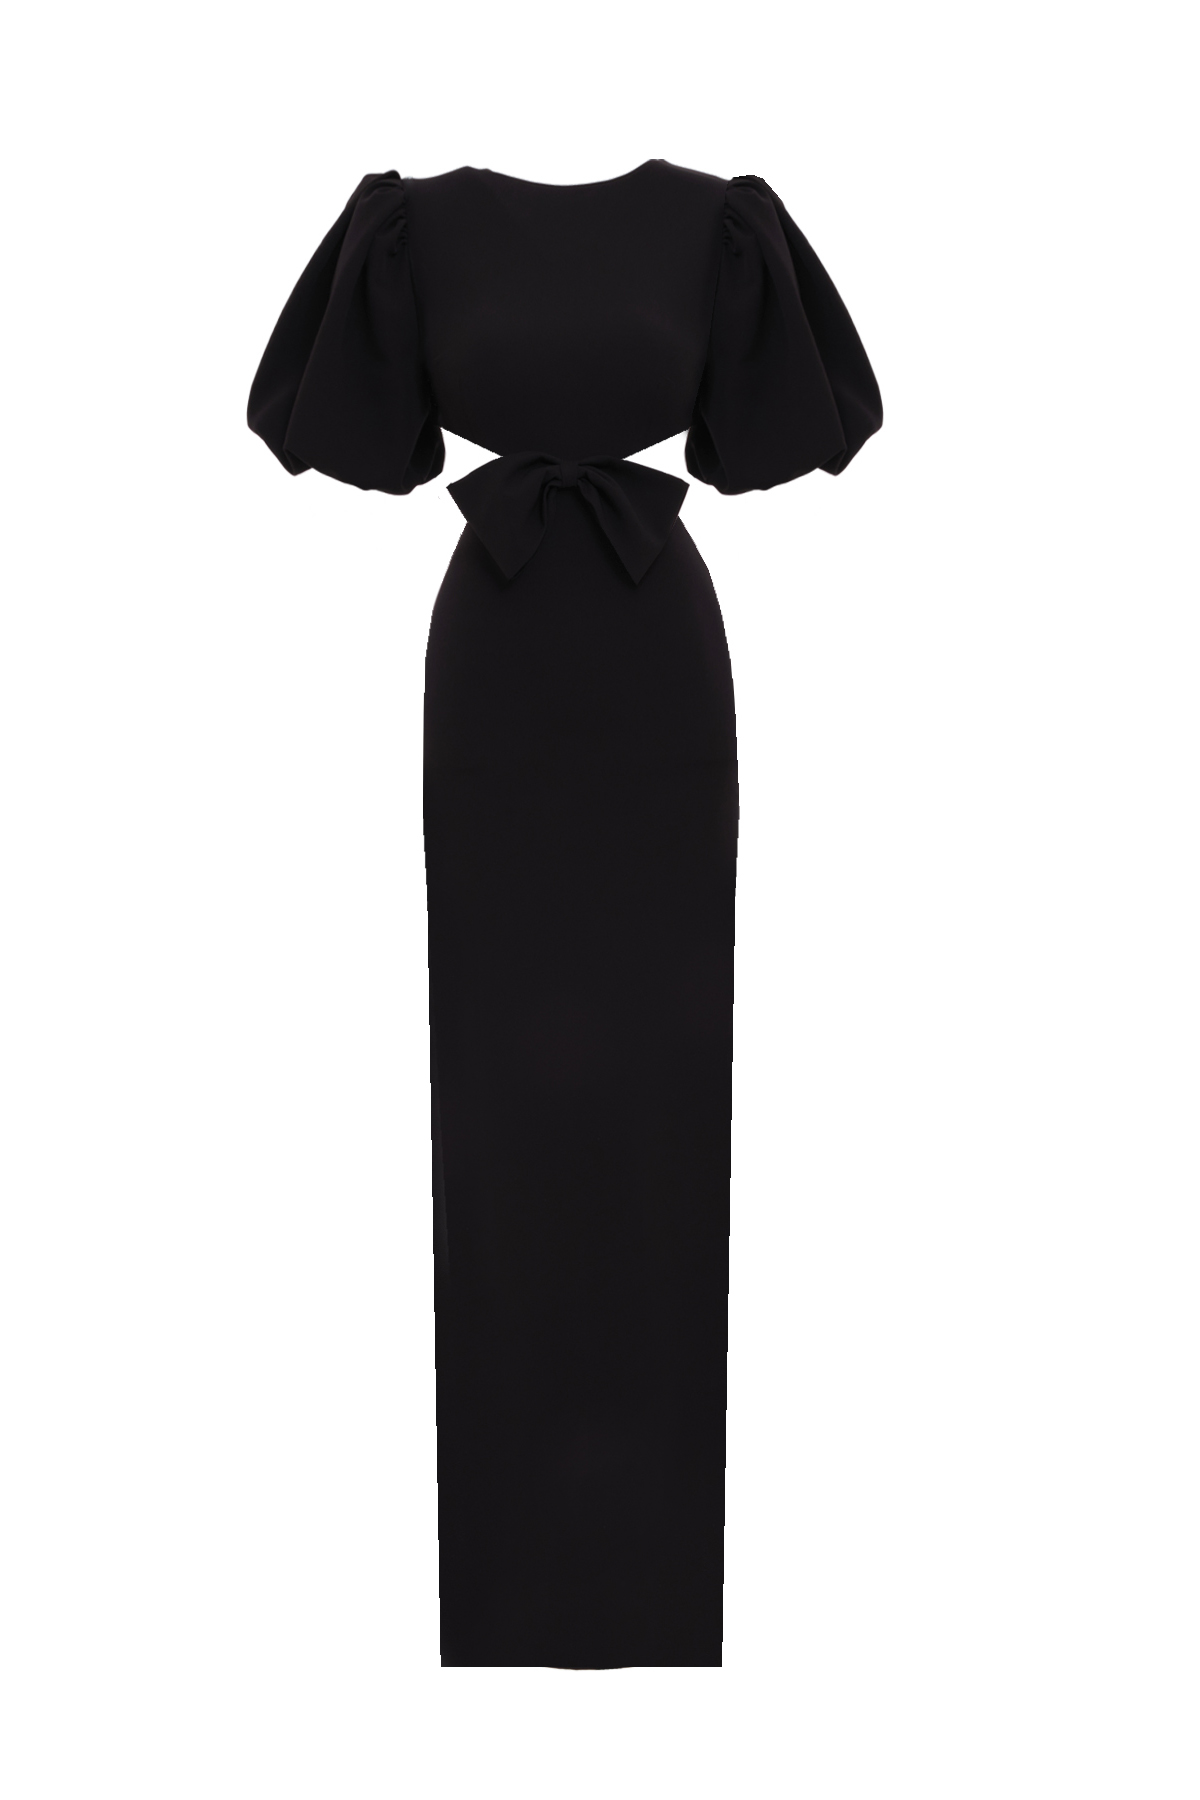 ROSETTA Cut Out Detailed Bow Maxi Black Dress